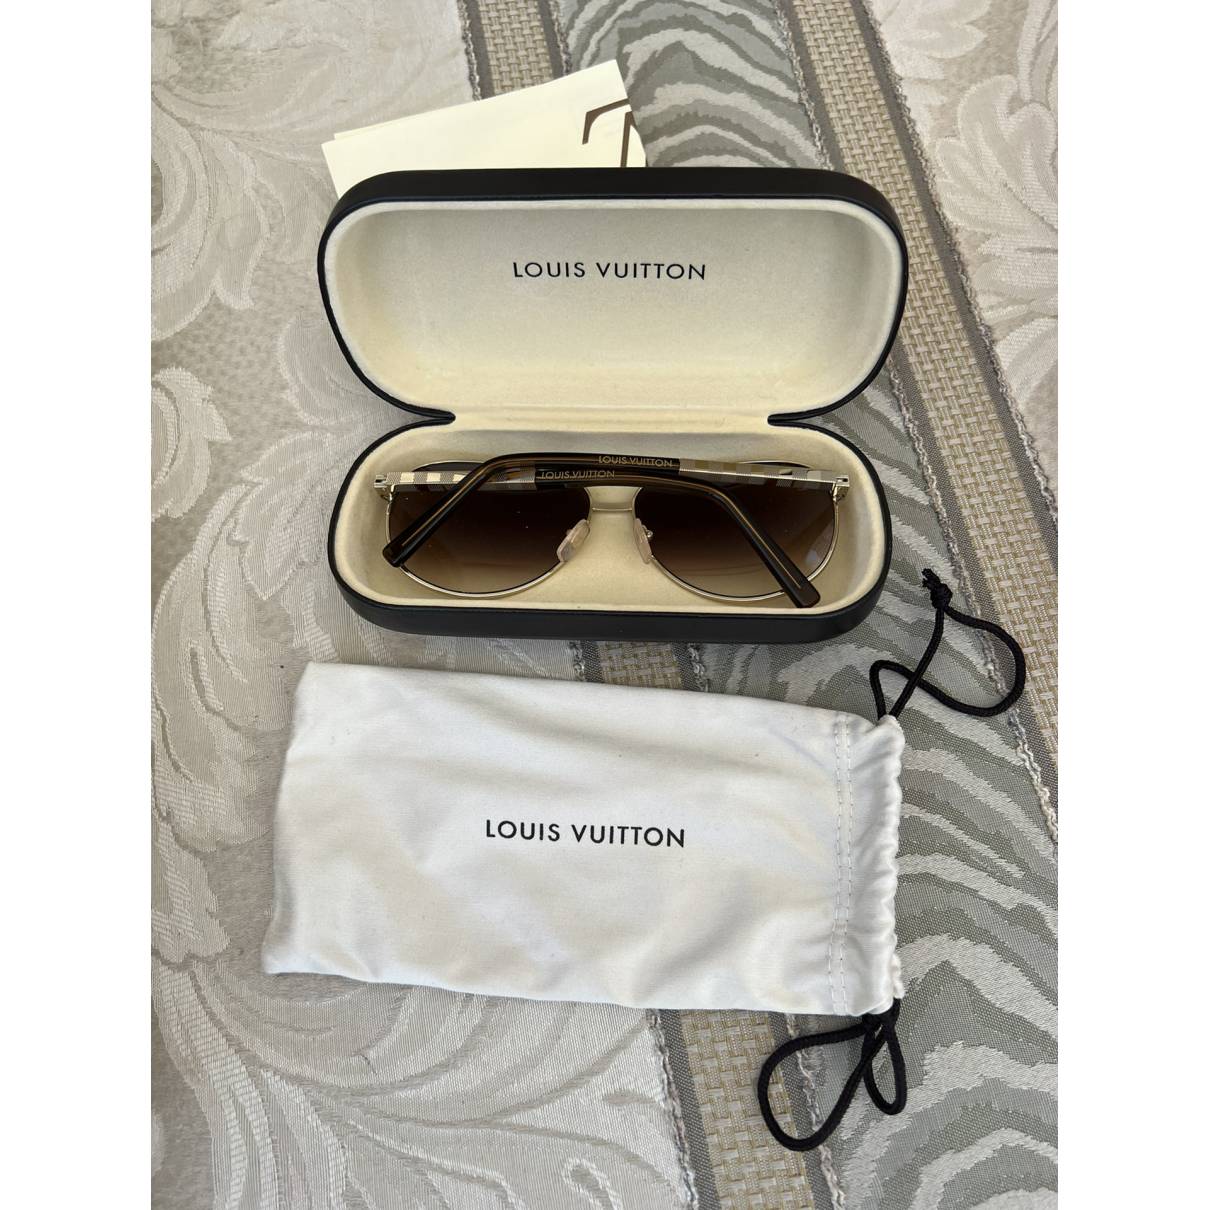 LOUIS VUITTON attitude arviator sunglasses model number